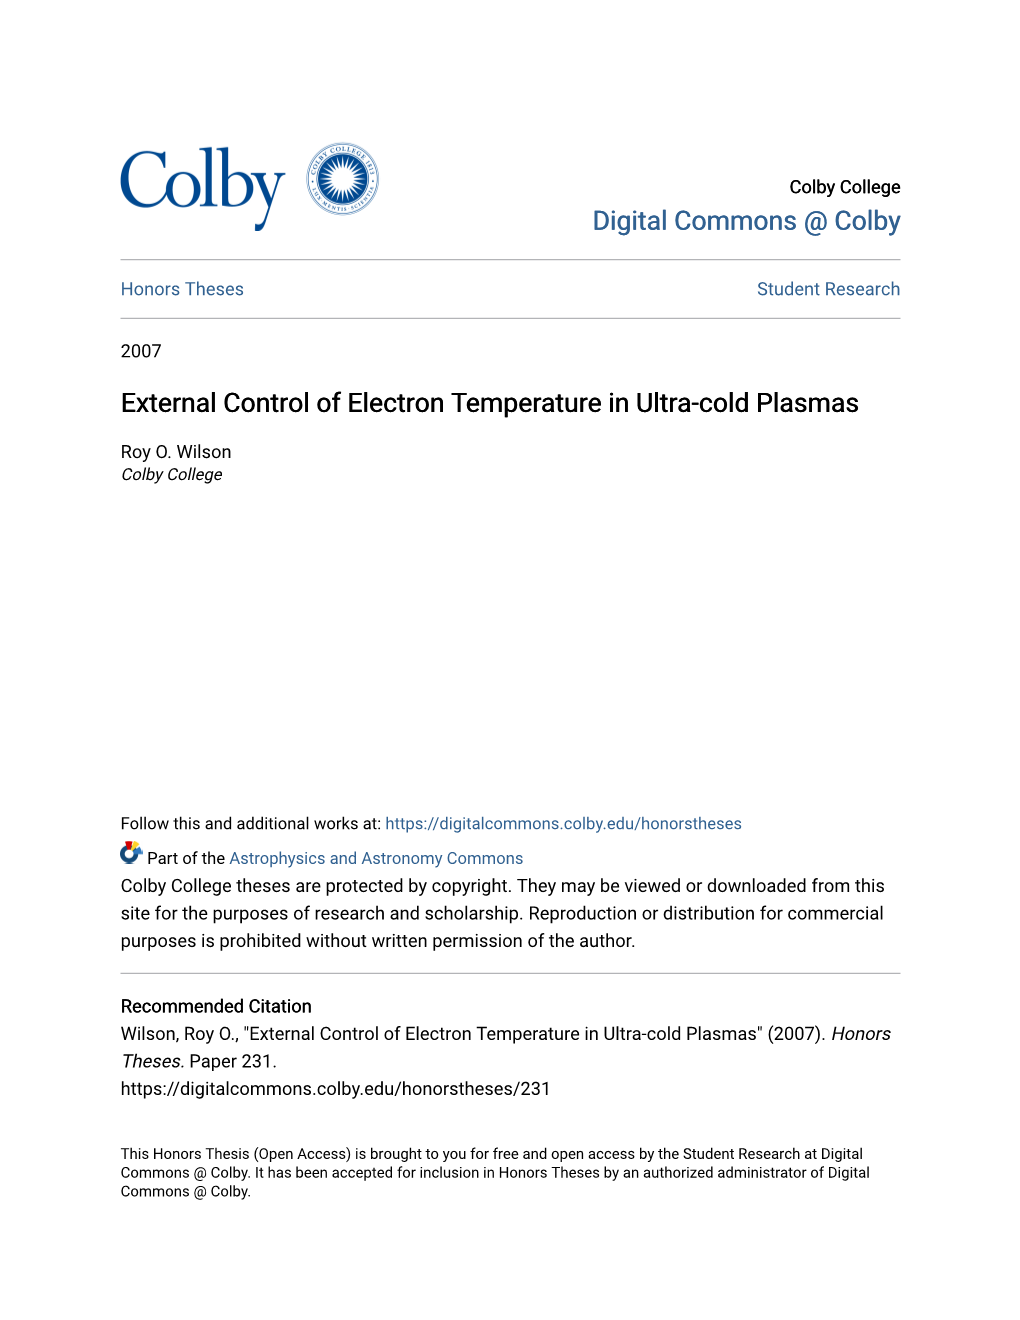 External Control of Electron Temperature in Ultra-Cold Plasmas